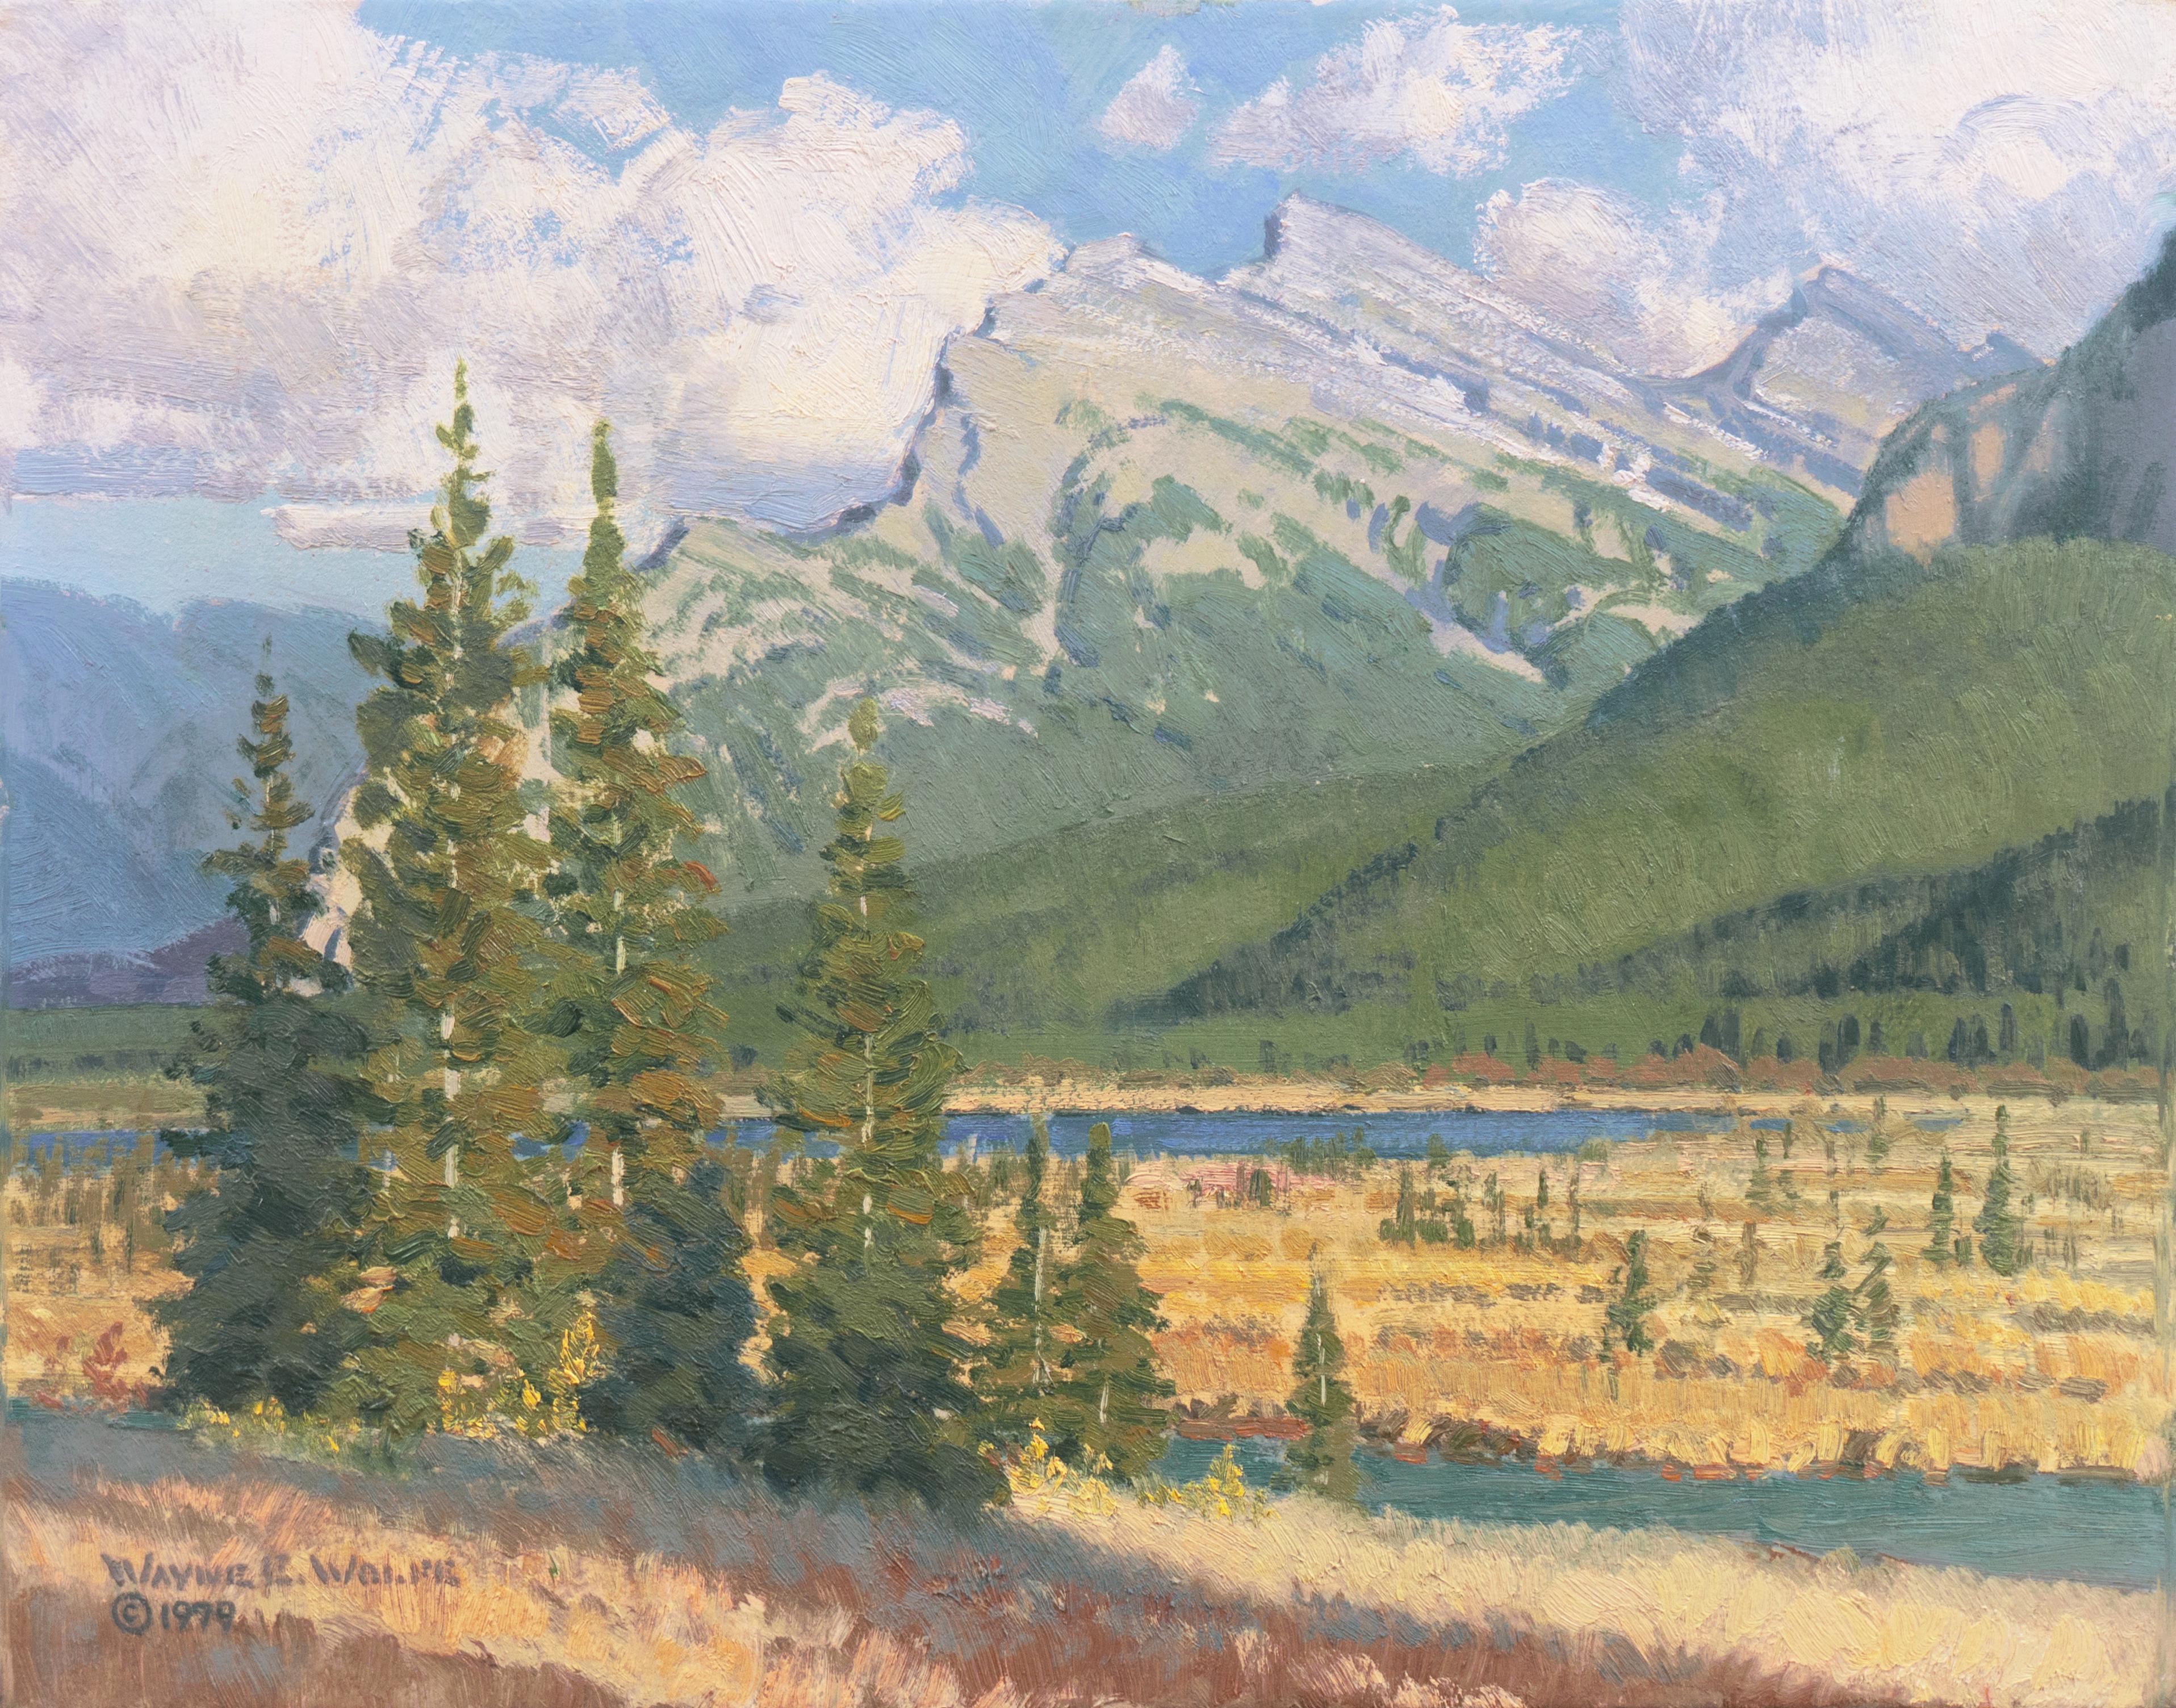 Wayne Wolfe Landscape Painting - 'Mt. Rundle, Canada', Alberta, Prix de West, National Academy of Western Art